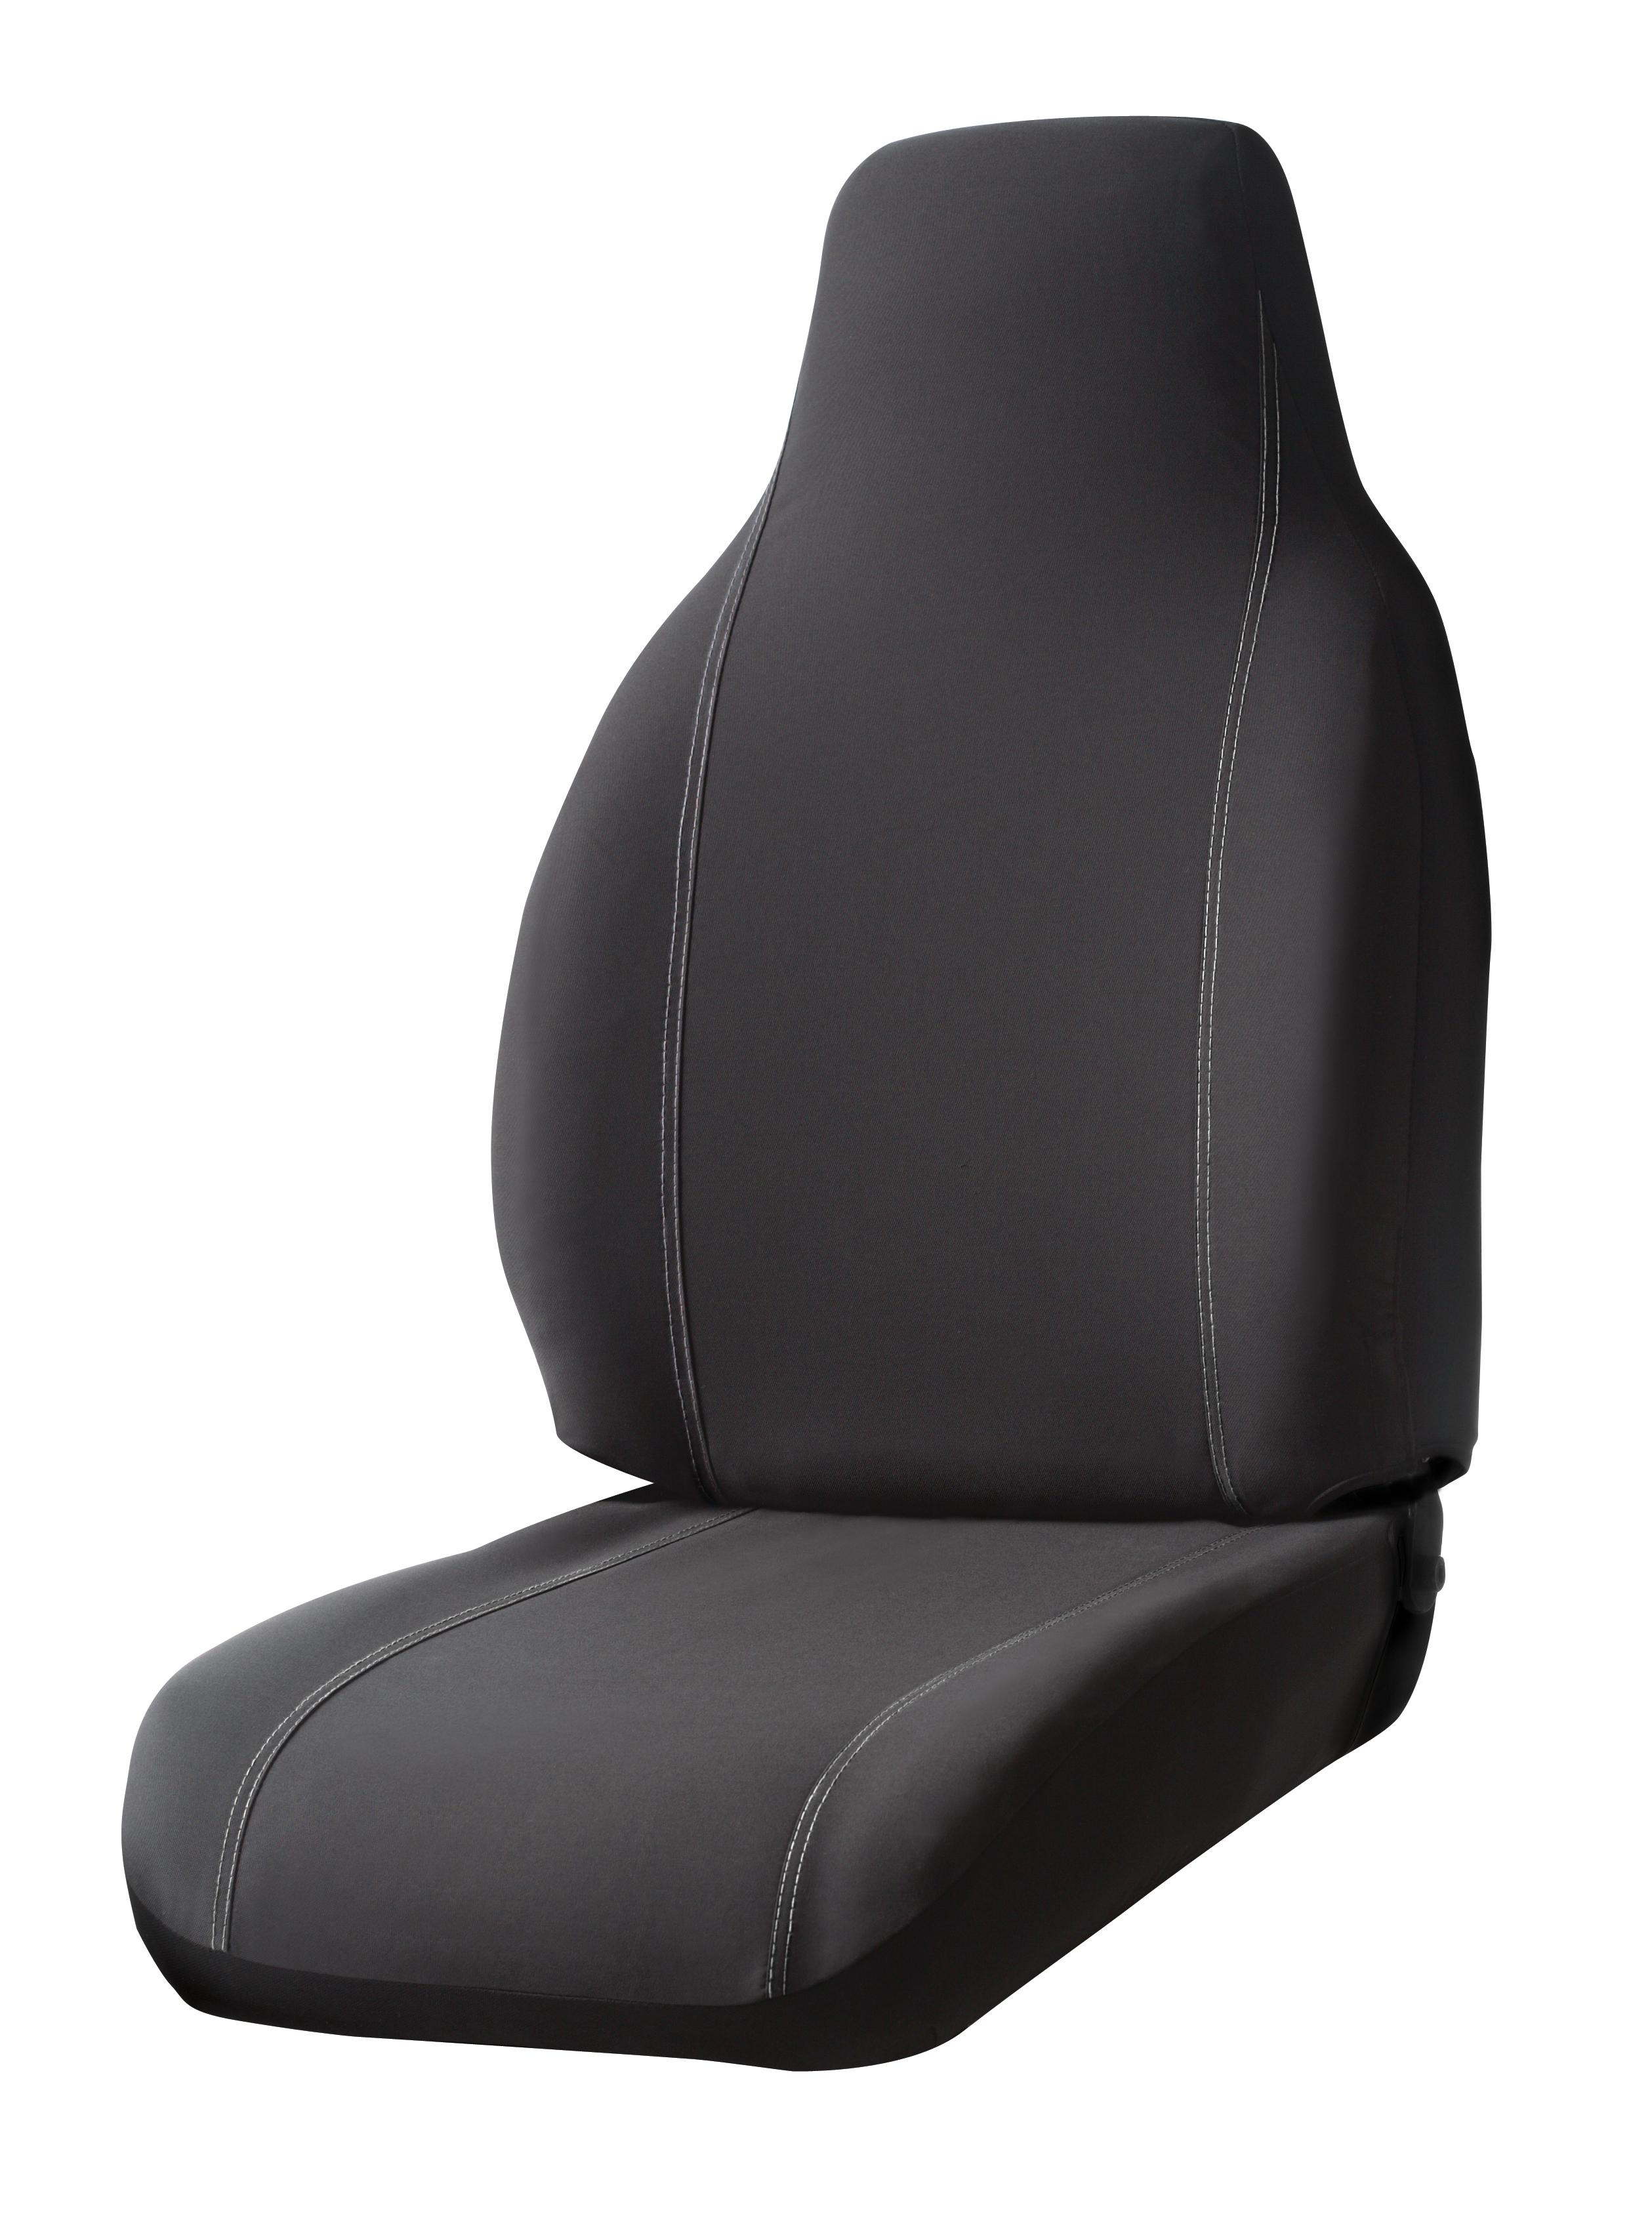 Show details for FIA SP8020 BLACK Sp80 Series - Poly Seat Cover - Black